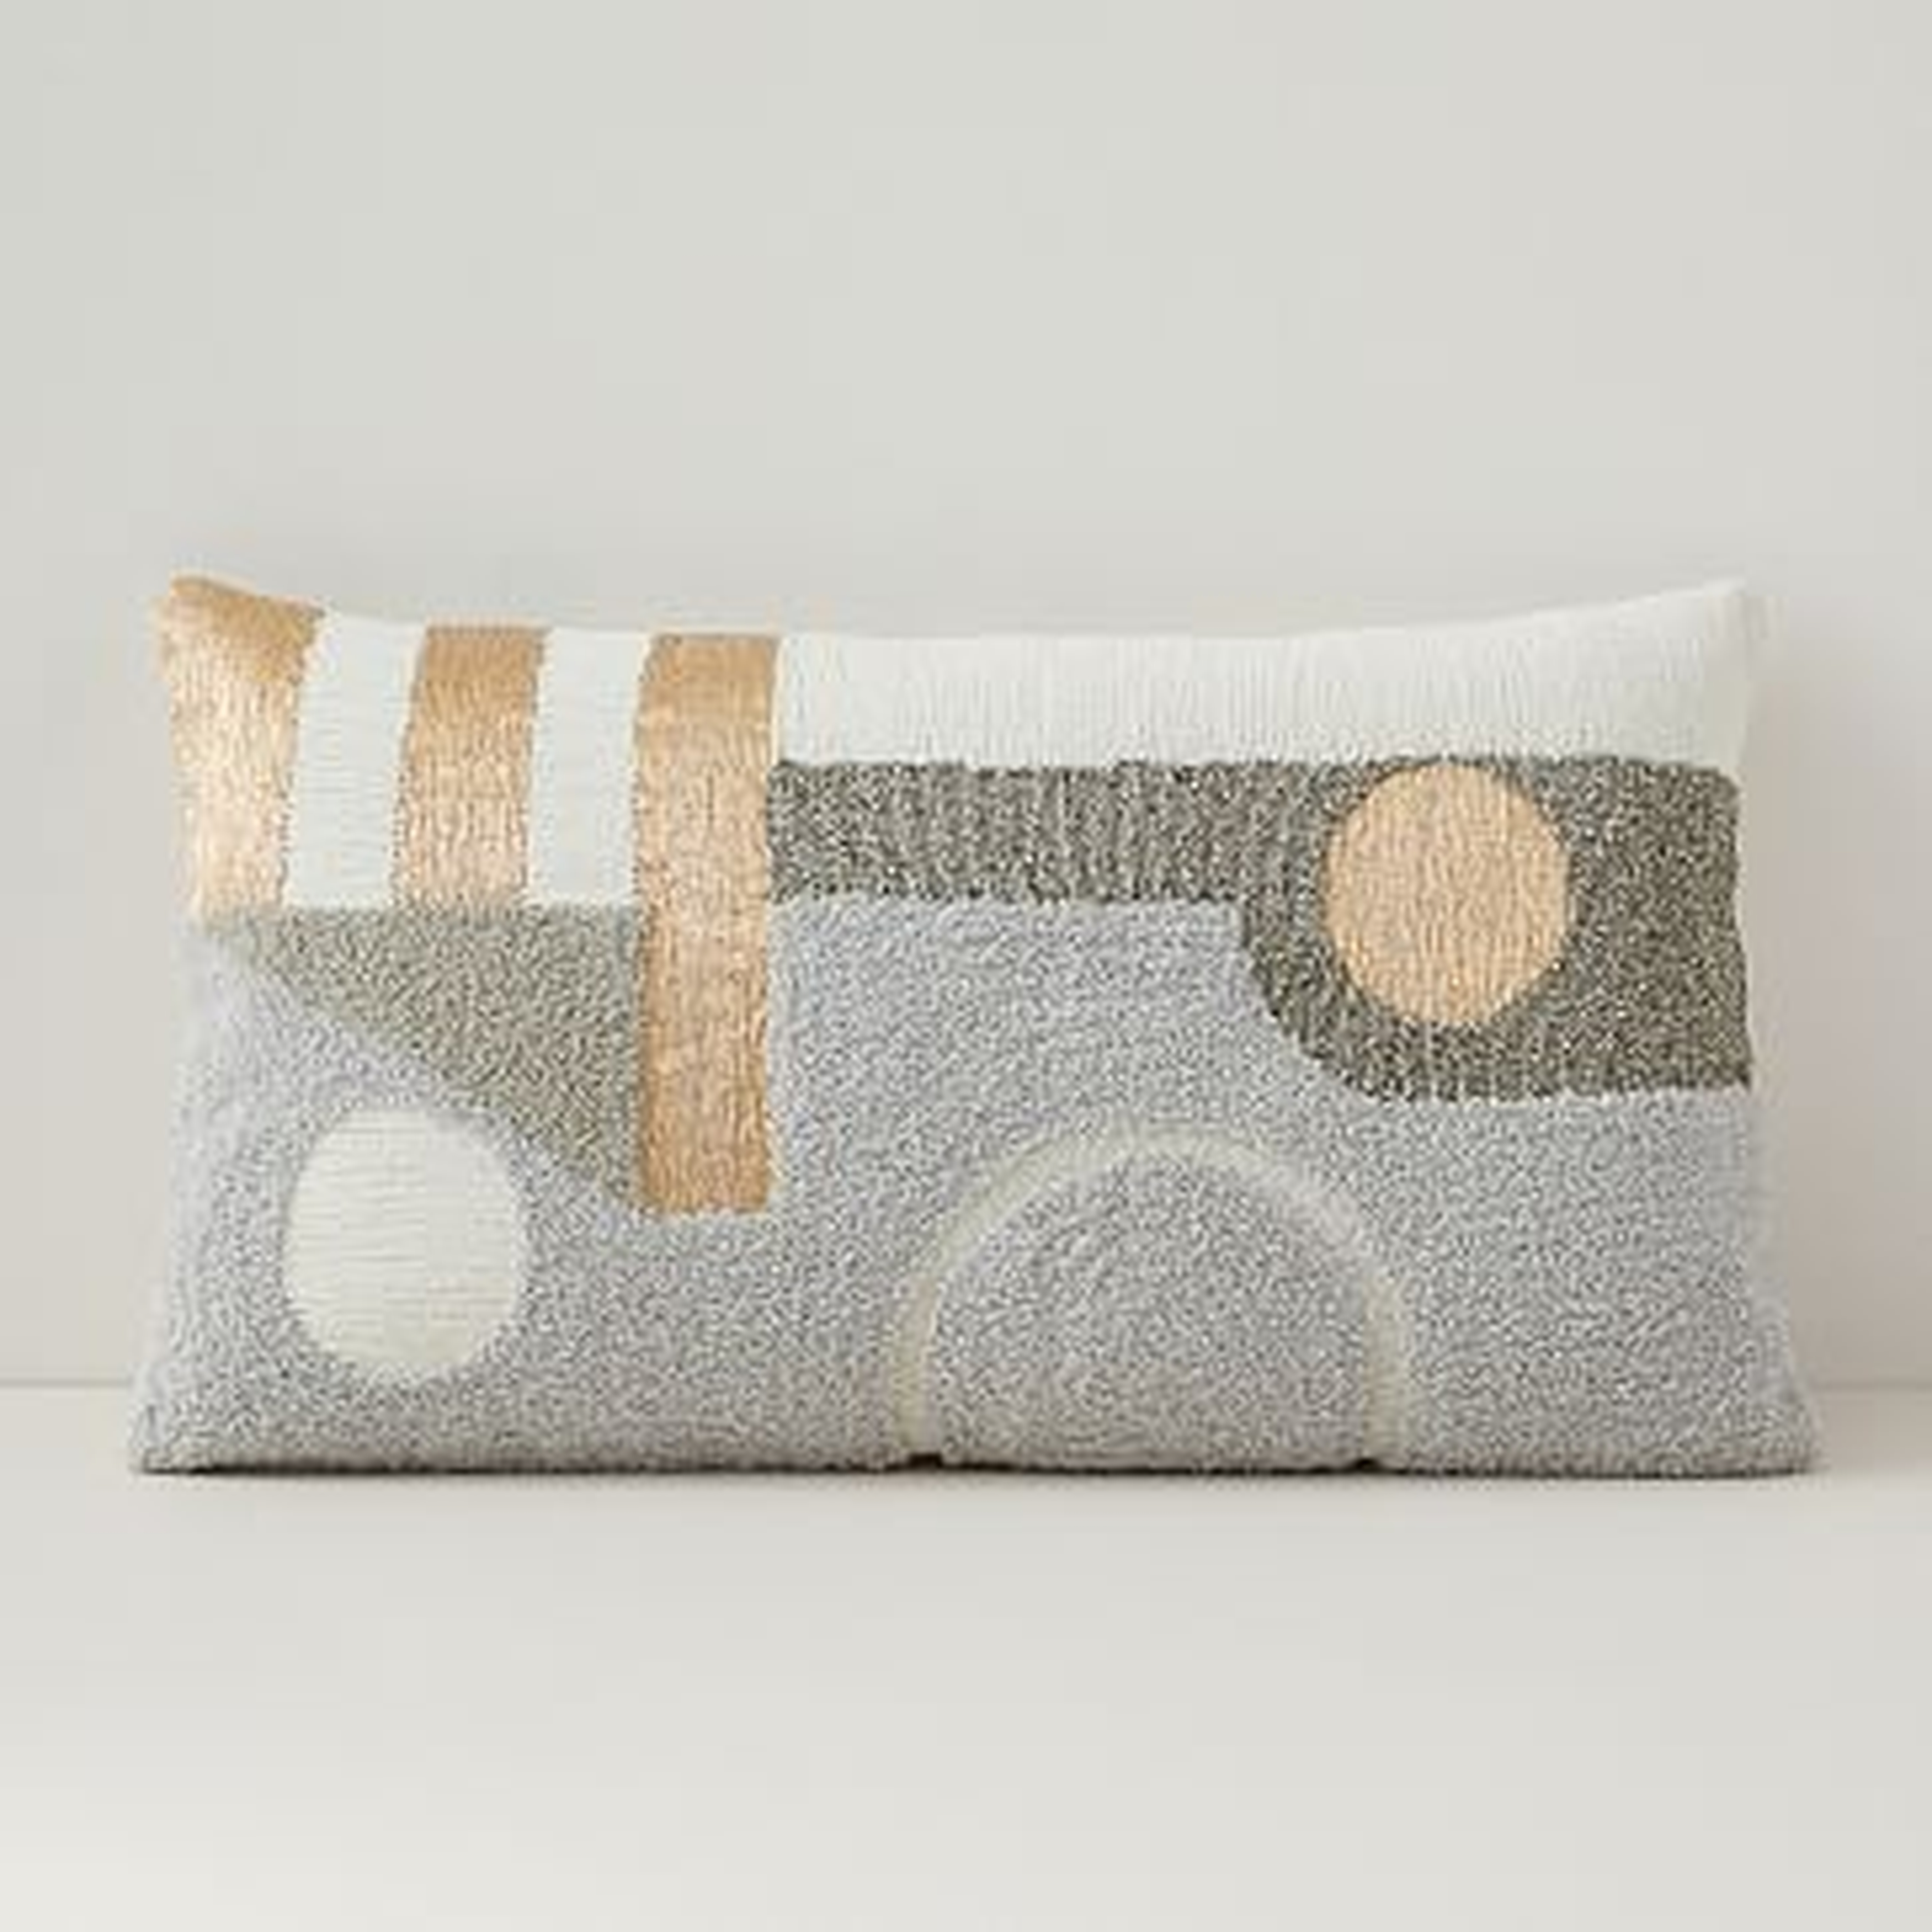 Embellished Deco Contours Pillow Cover, 12"x21", Neutral - West Elm